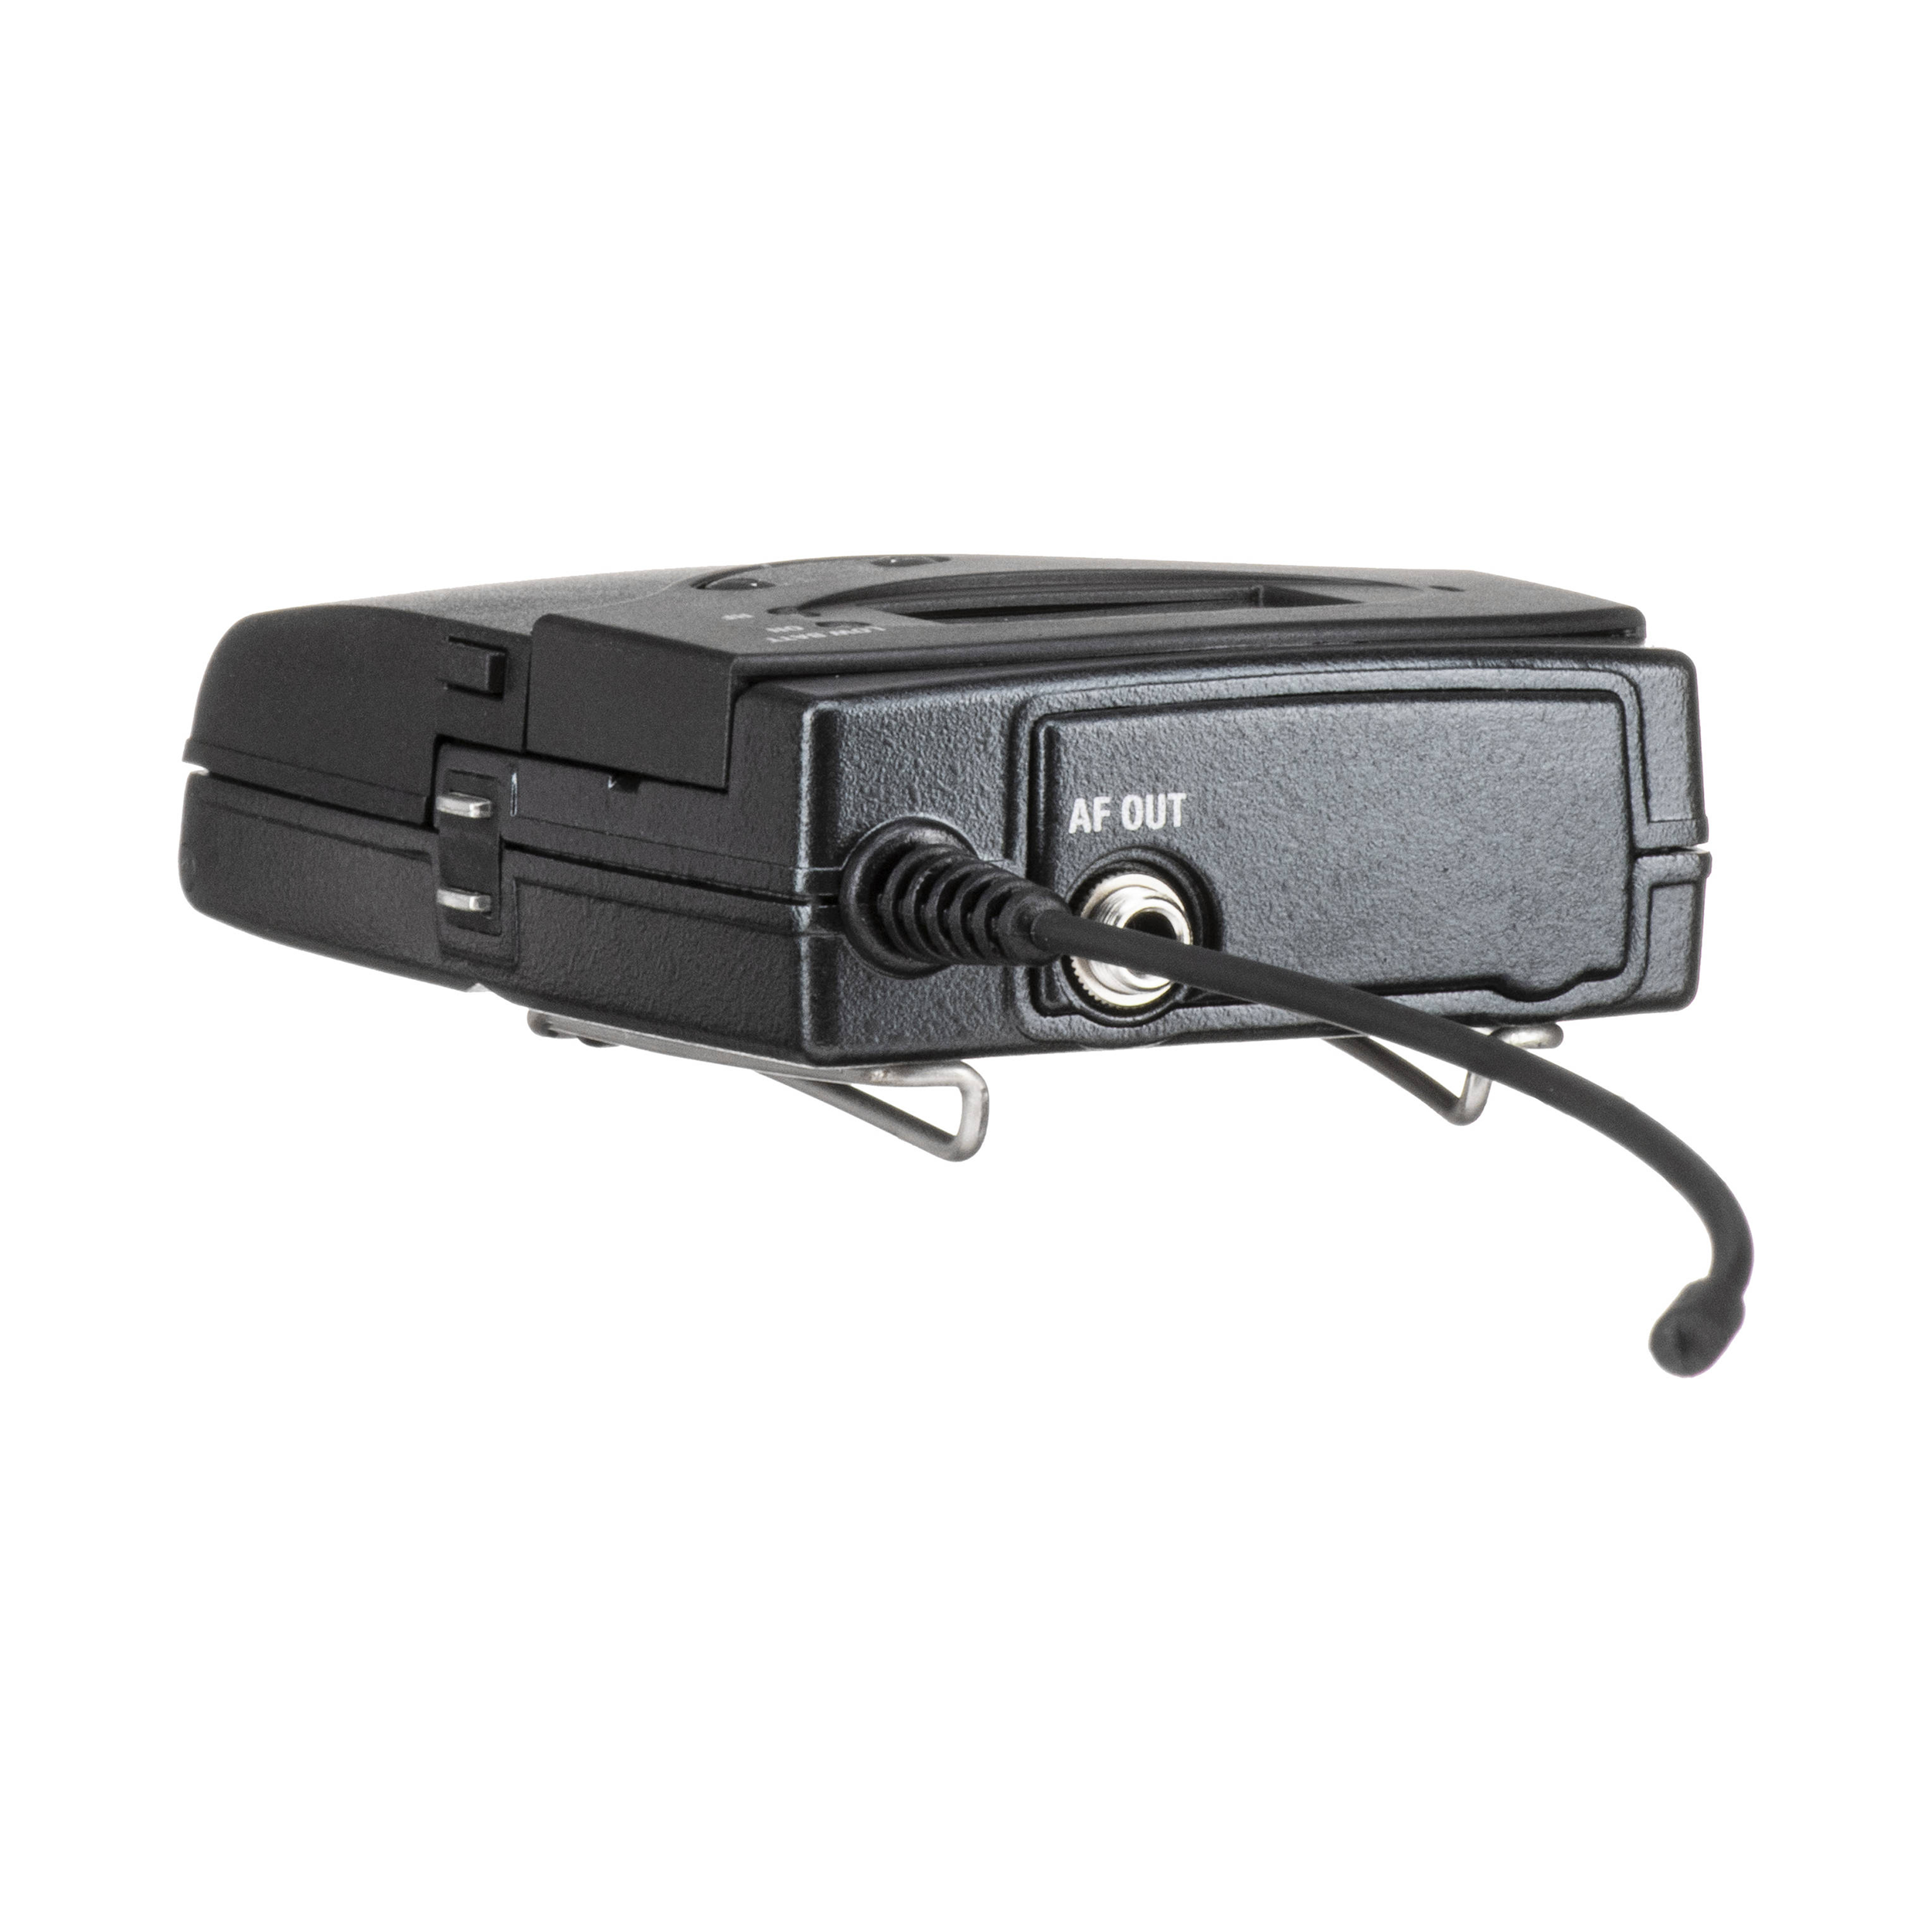 Sennheiser EW112P G4 Camera-Mount Wireless Microphone System ME 2-II Lavalier Mic - A: 516 to 558 MHz